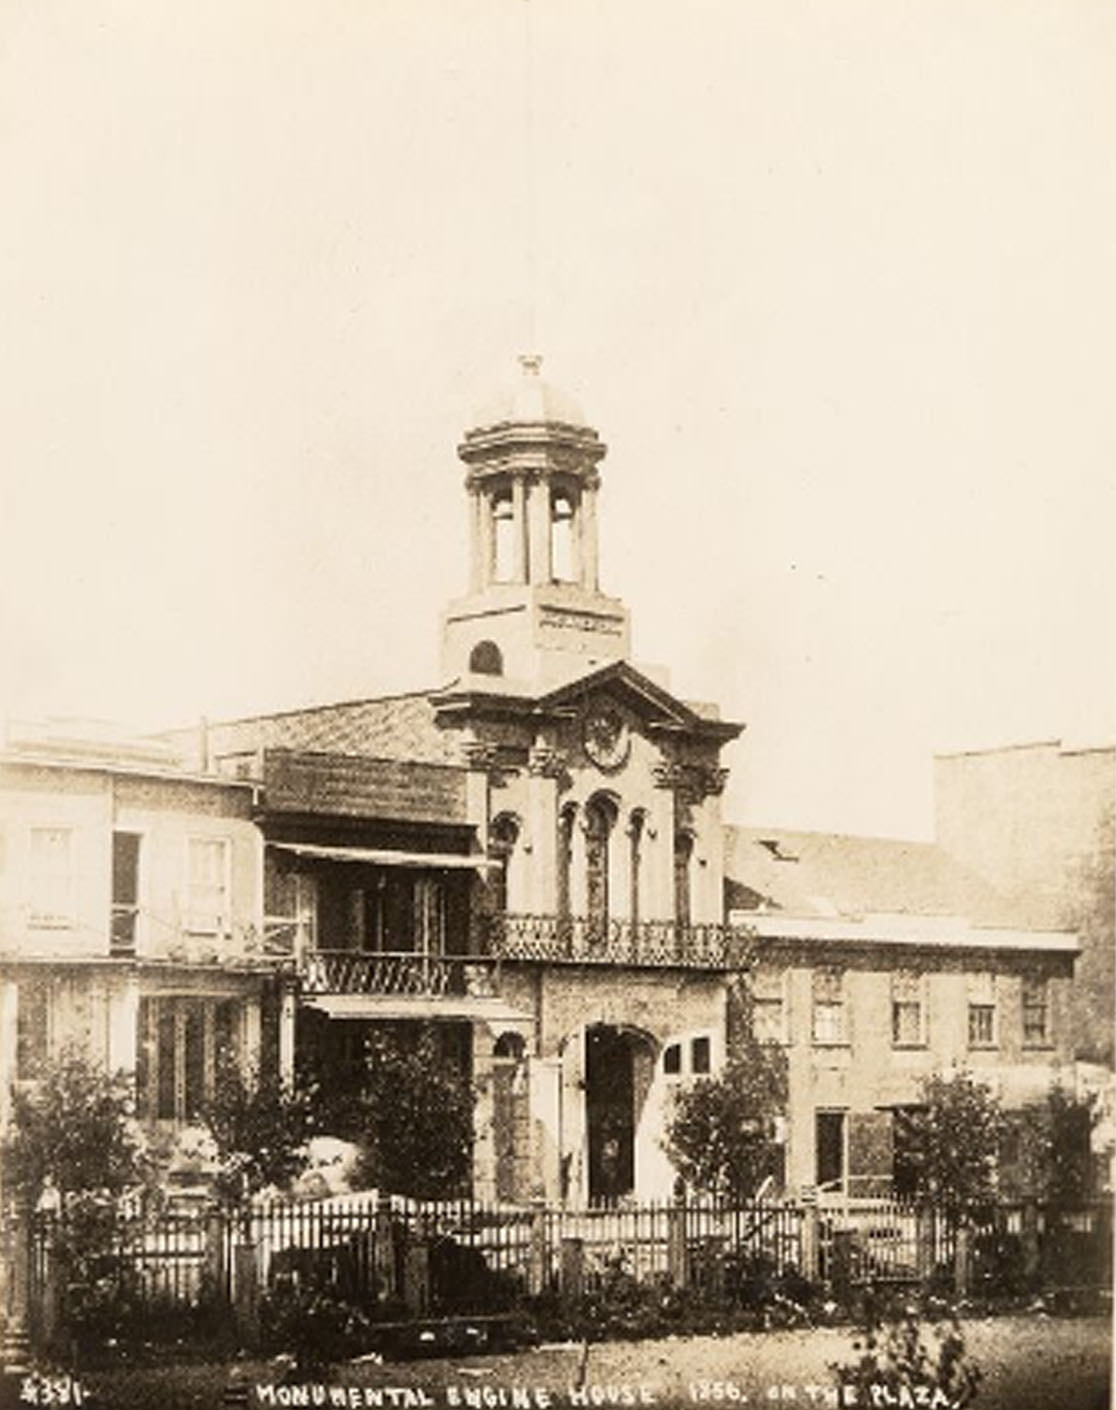 Monumental Engine House on the plaza, 1856